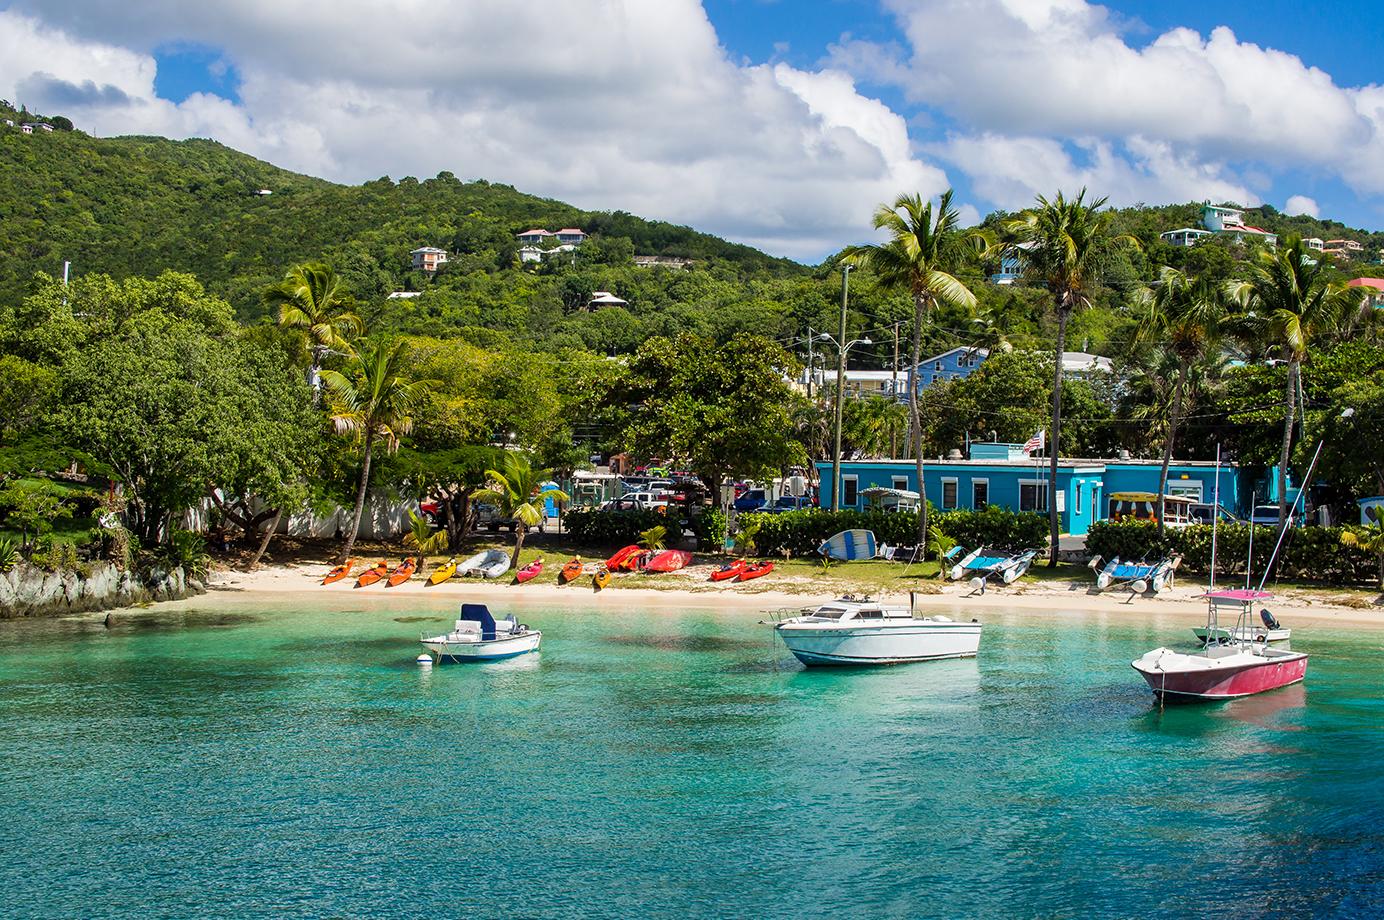 Boats docked at the beach in St. John, US Virgin Islands